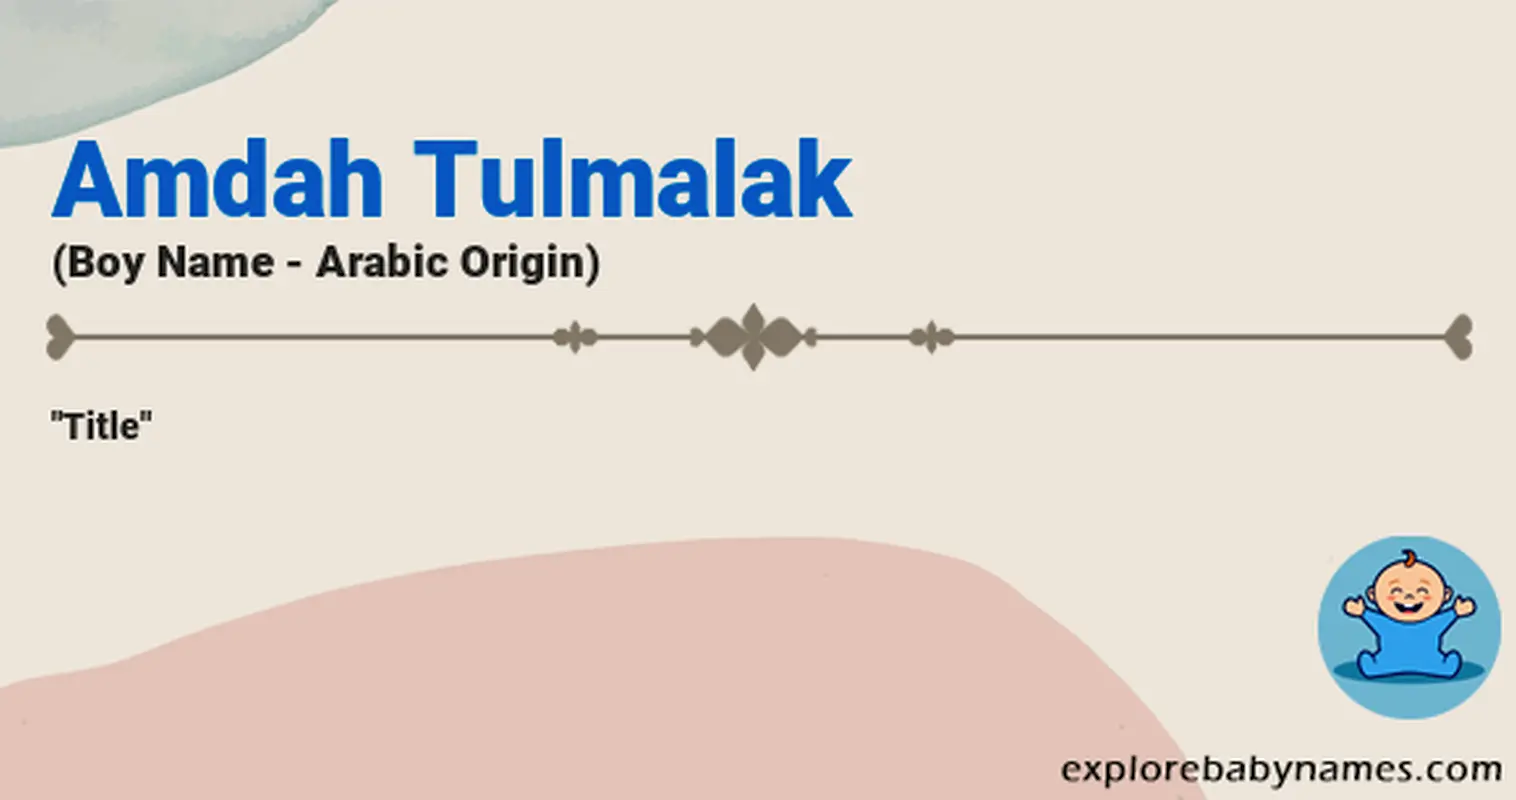 Meaning of Amdah Tulmalak